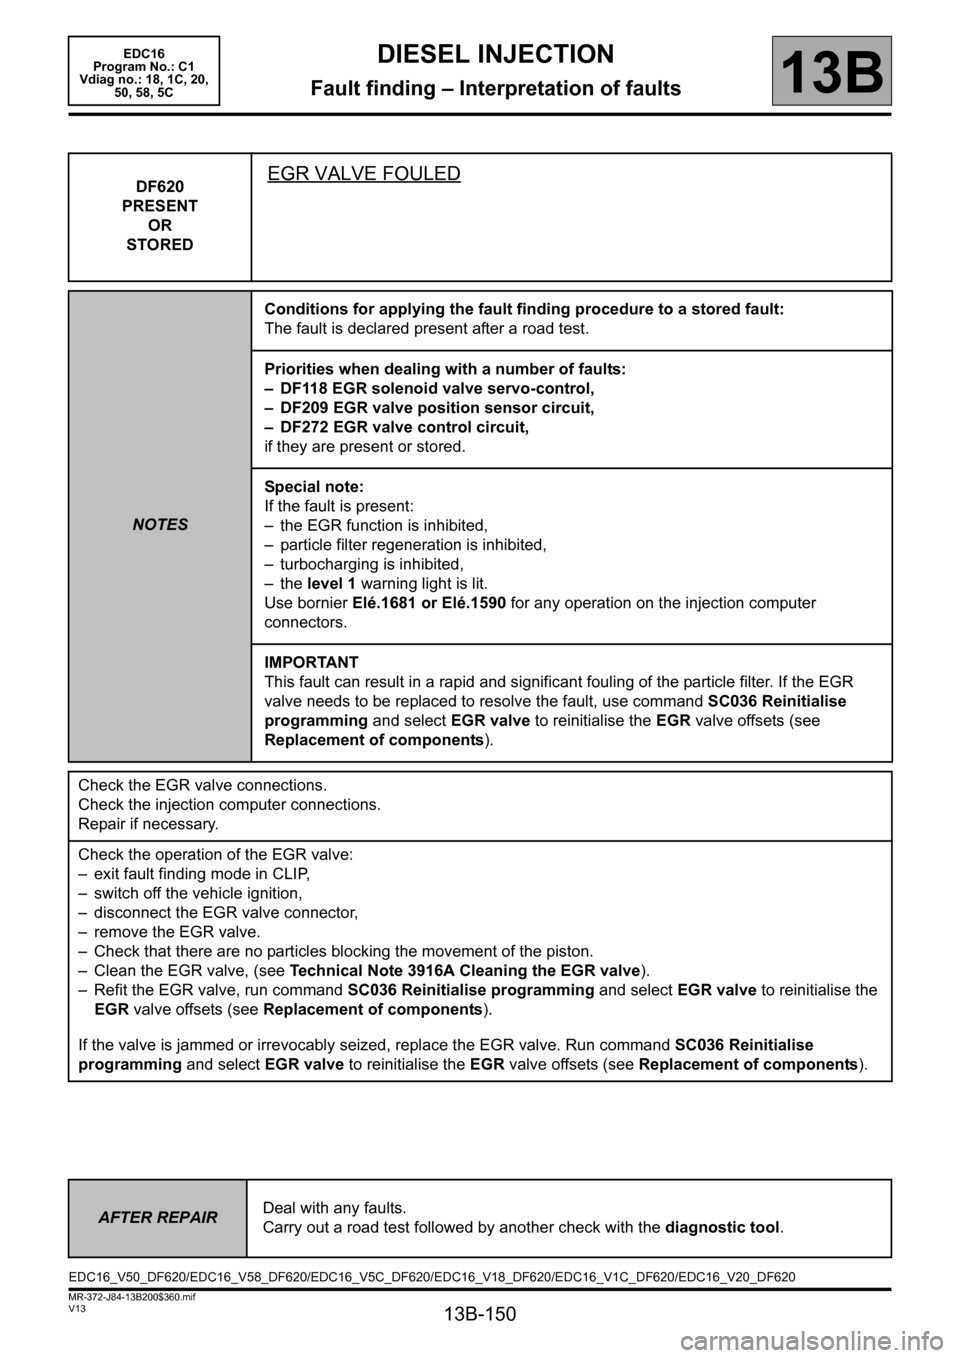 RENAULT SCENIC 2011 J95 / 3.G Engine And Peripherals EDC16 Workshop Manual 13B-150
MR-372-J84-13B200$360.mif
V13
DIESEL INJECTION
Fault finding – Interpretation of faults
EDC16  
Program No.: C1 
Vdiag no.: 18, 1C, 20,  
50, 58, 5C
13B
DF620
PRESENT
OR
STOREDEGR VALVE FOUL